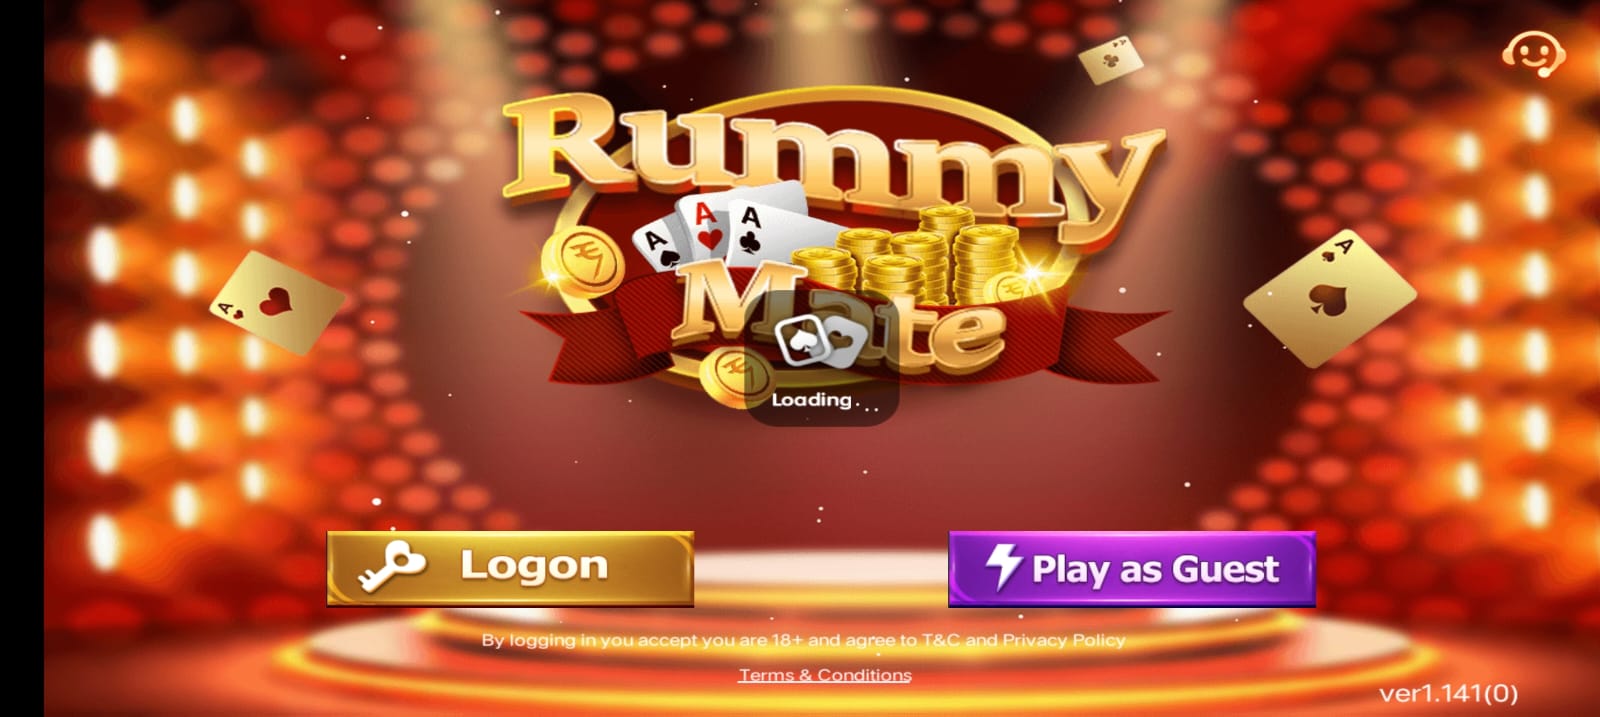 Rummy Mate App